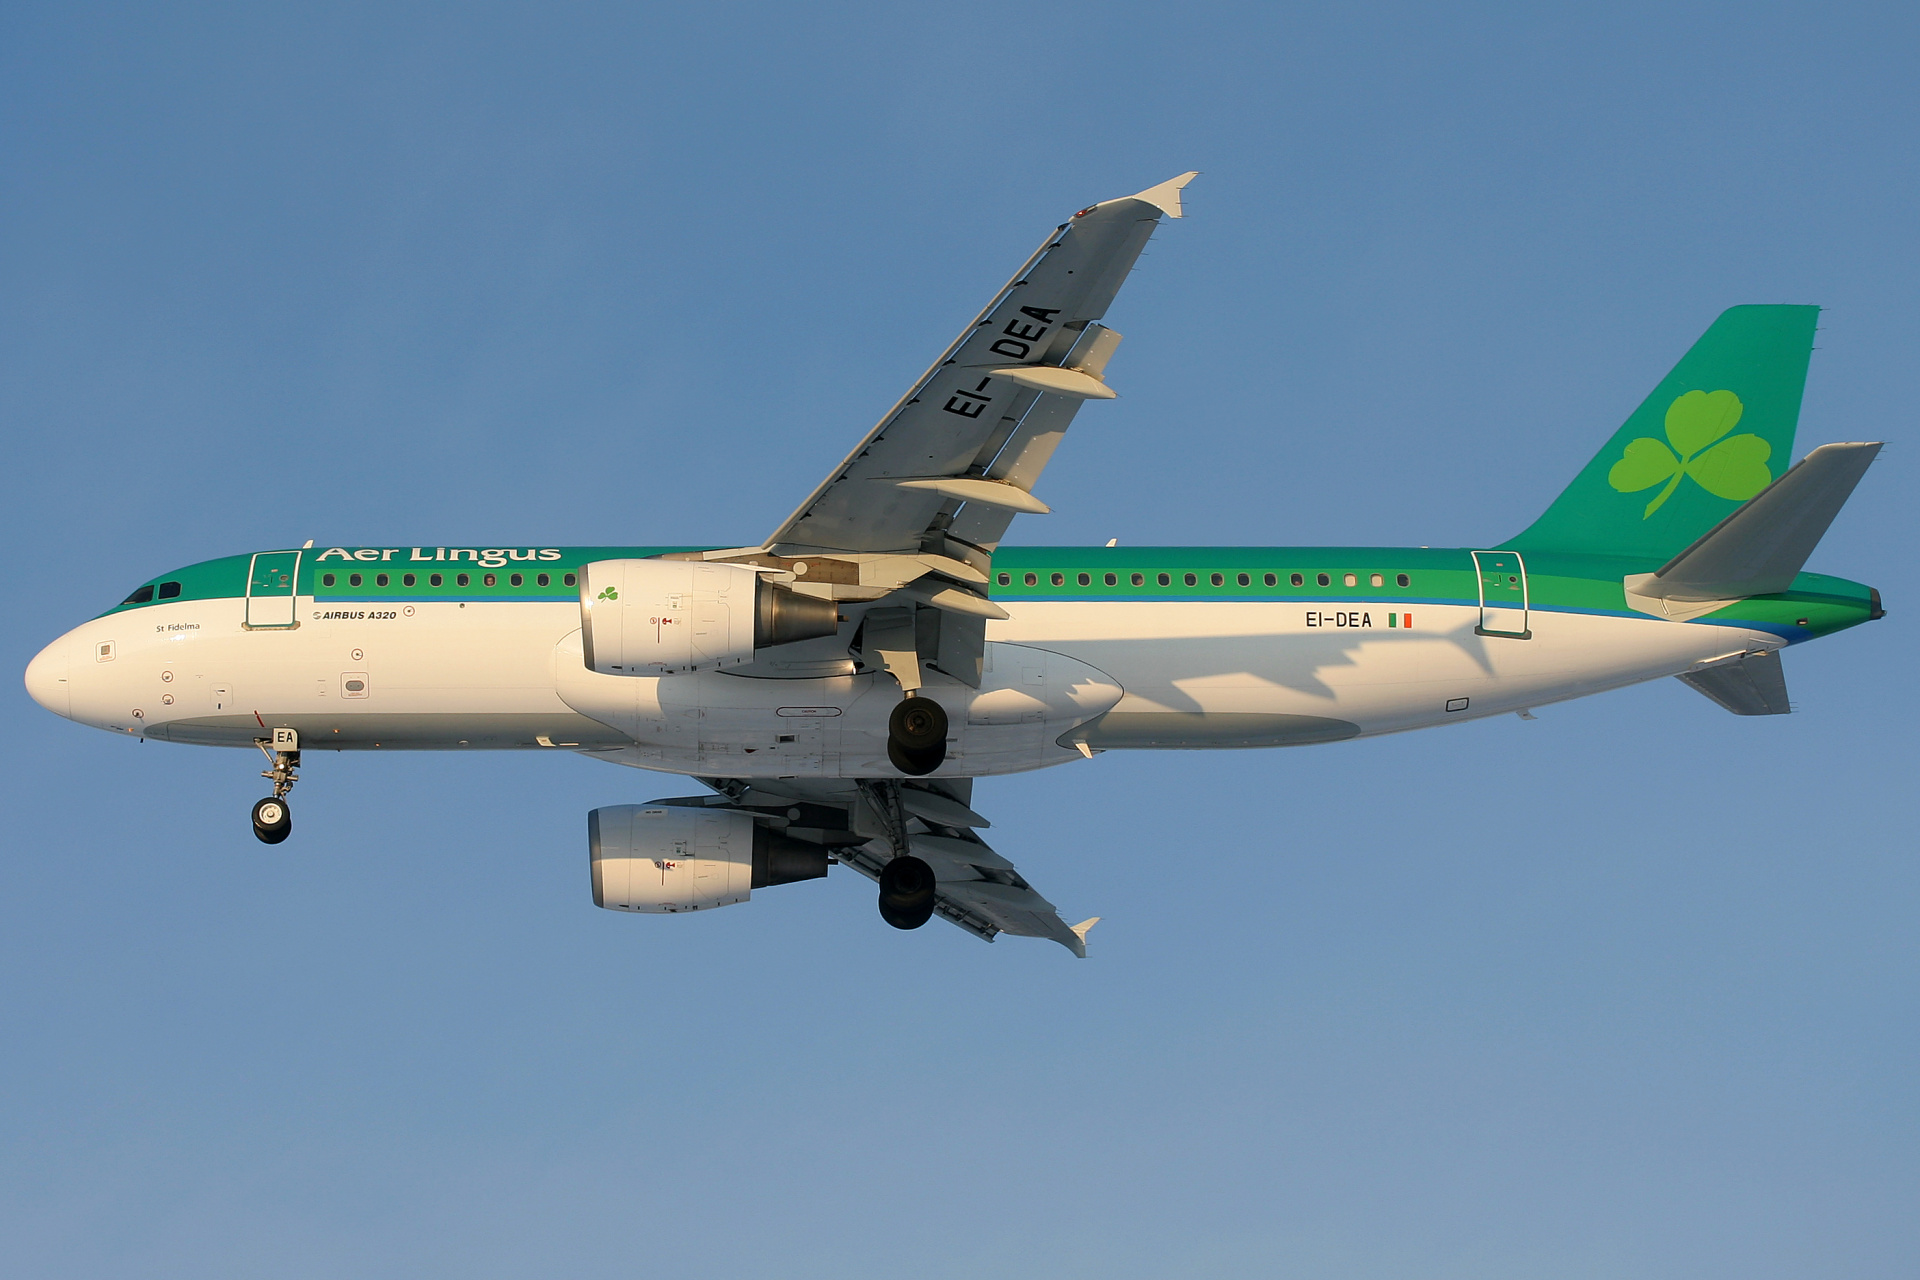 EI-DEA (Aircraft » EPWA Spotting » Airbus A320-200 » Aer Lingus)